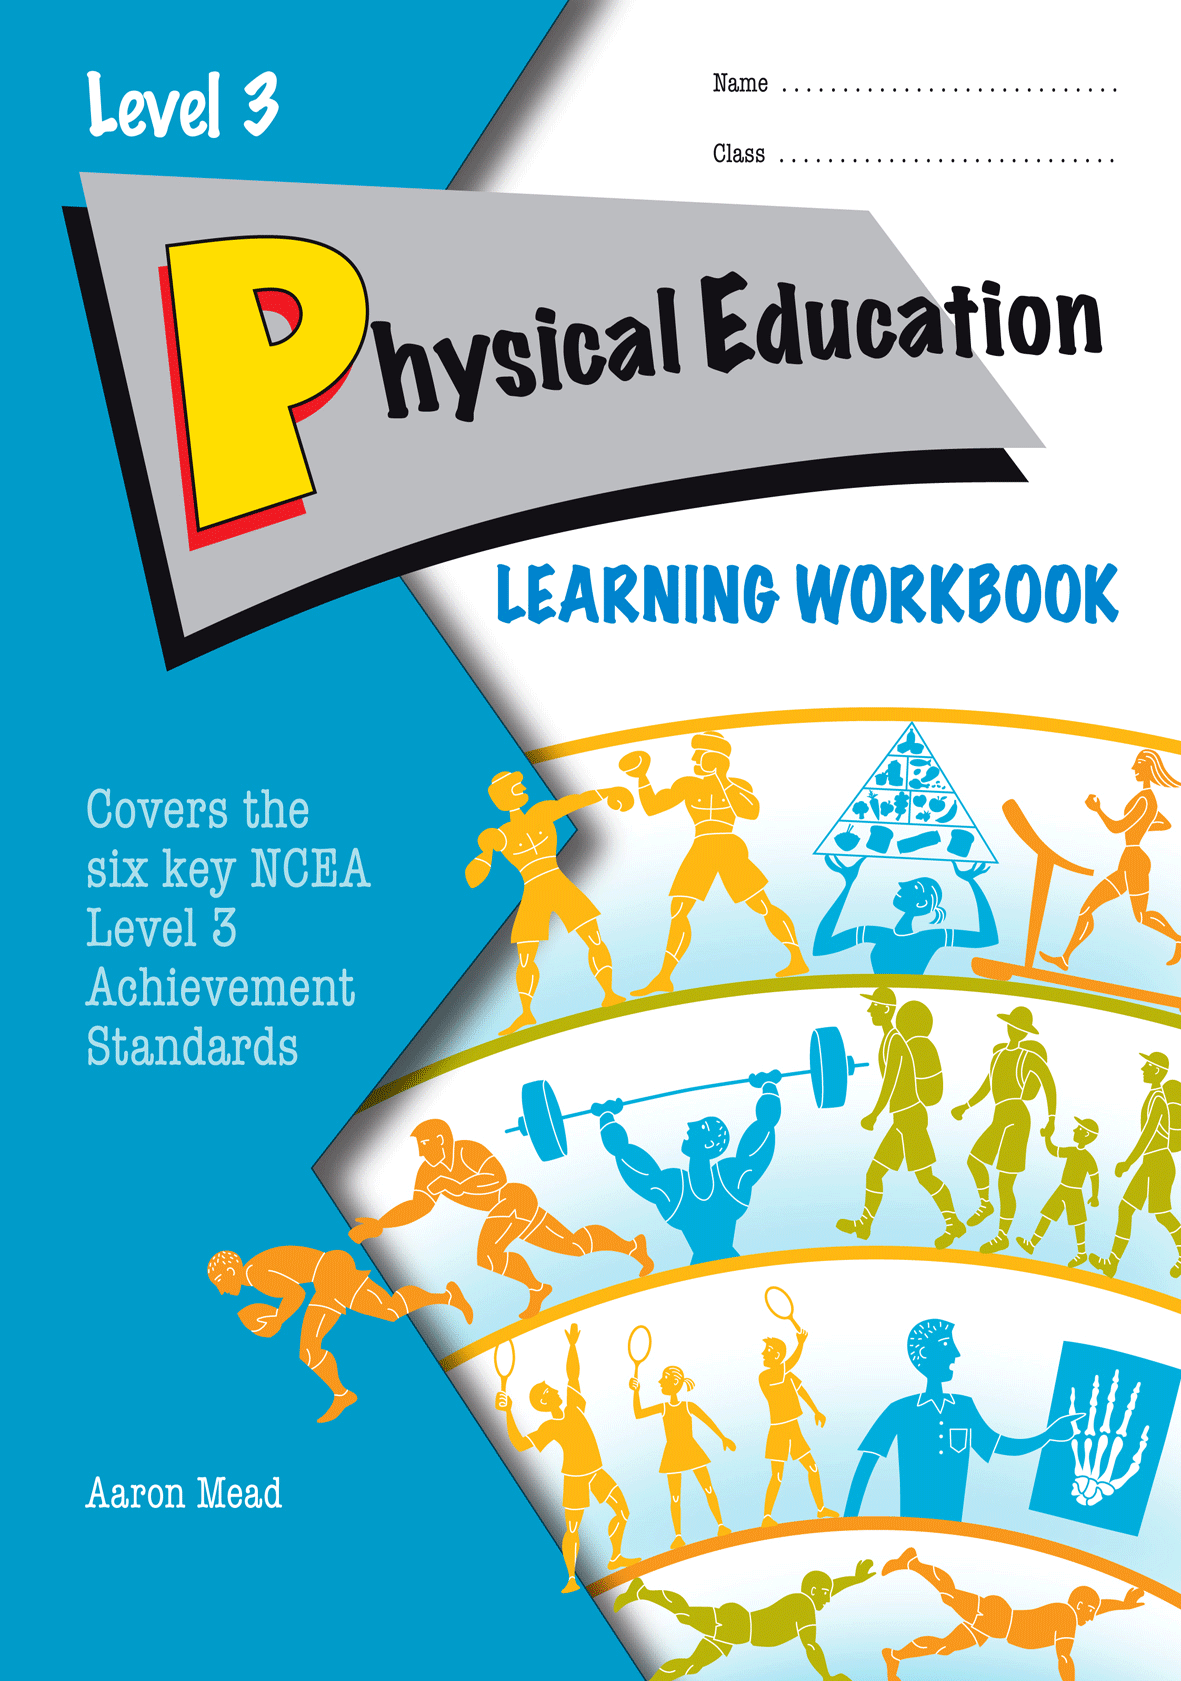 Level 3 Physical Education Learning Workbook